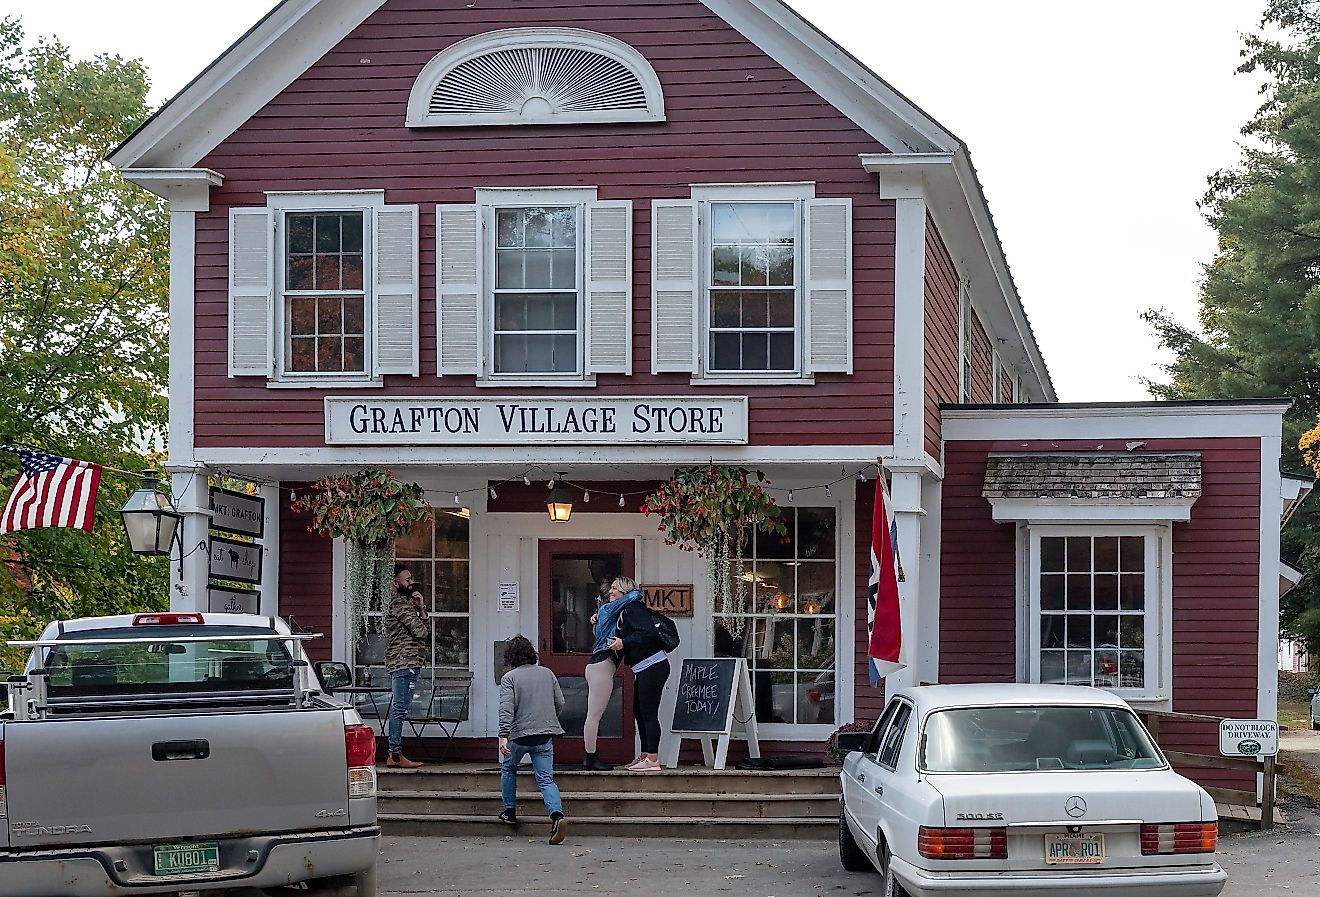 A welcoming hug at the Grafton Village Store. Image credit Bob LoCiero via Shutterstock